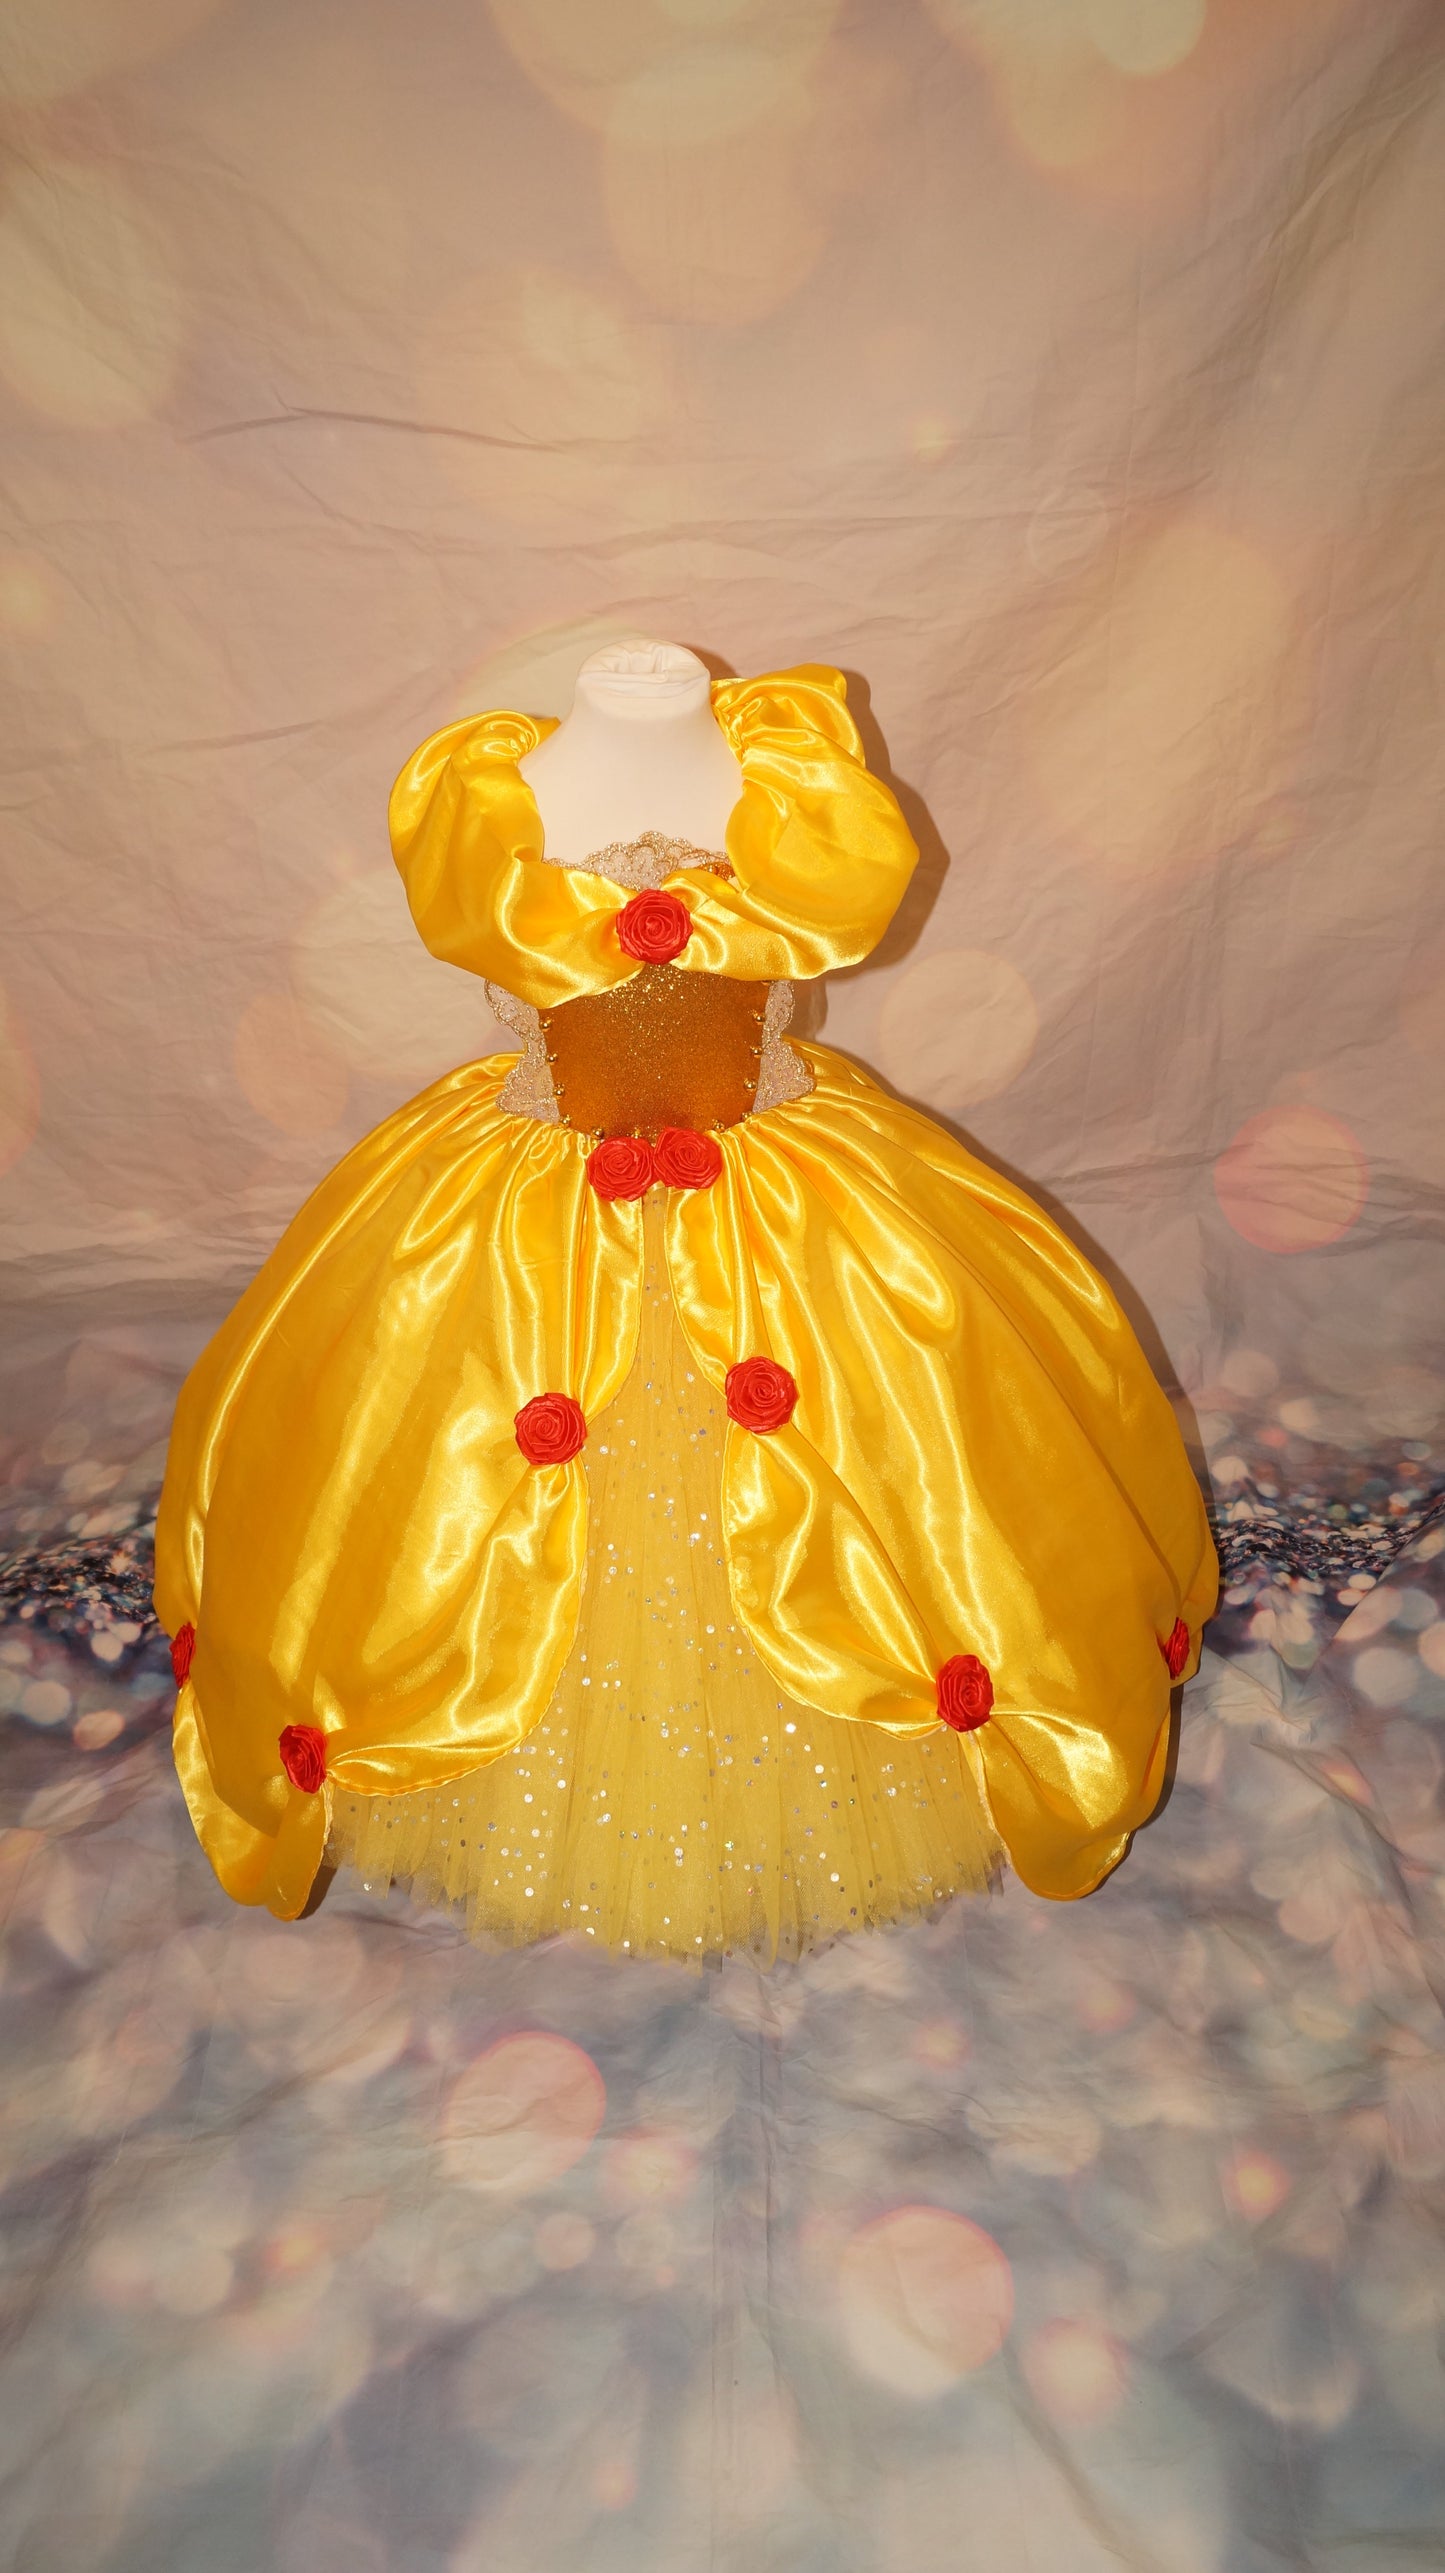 Disney Princess Belle Beauty and the Beast Satin Inspired Tutu Dress